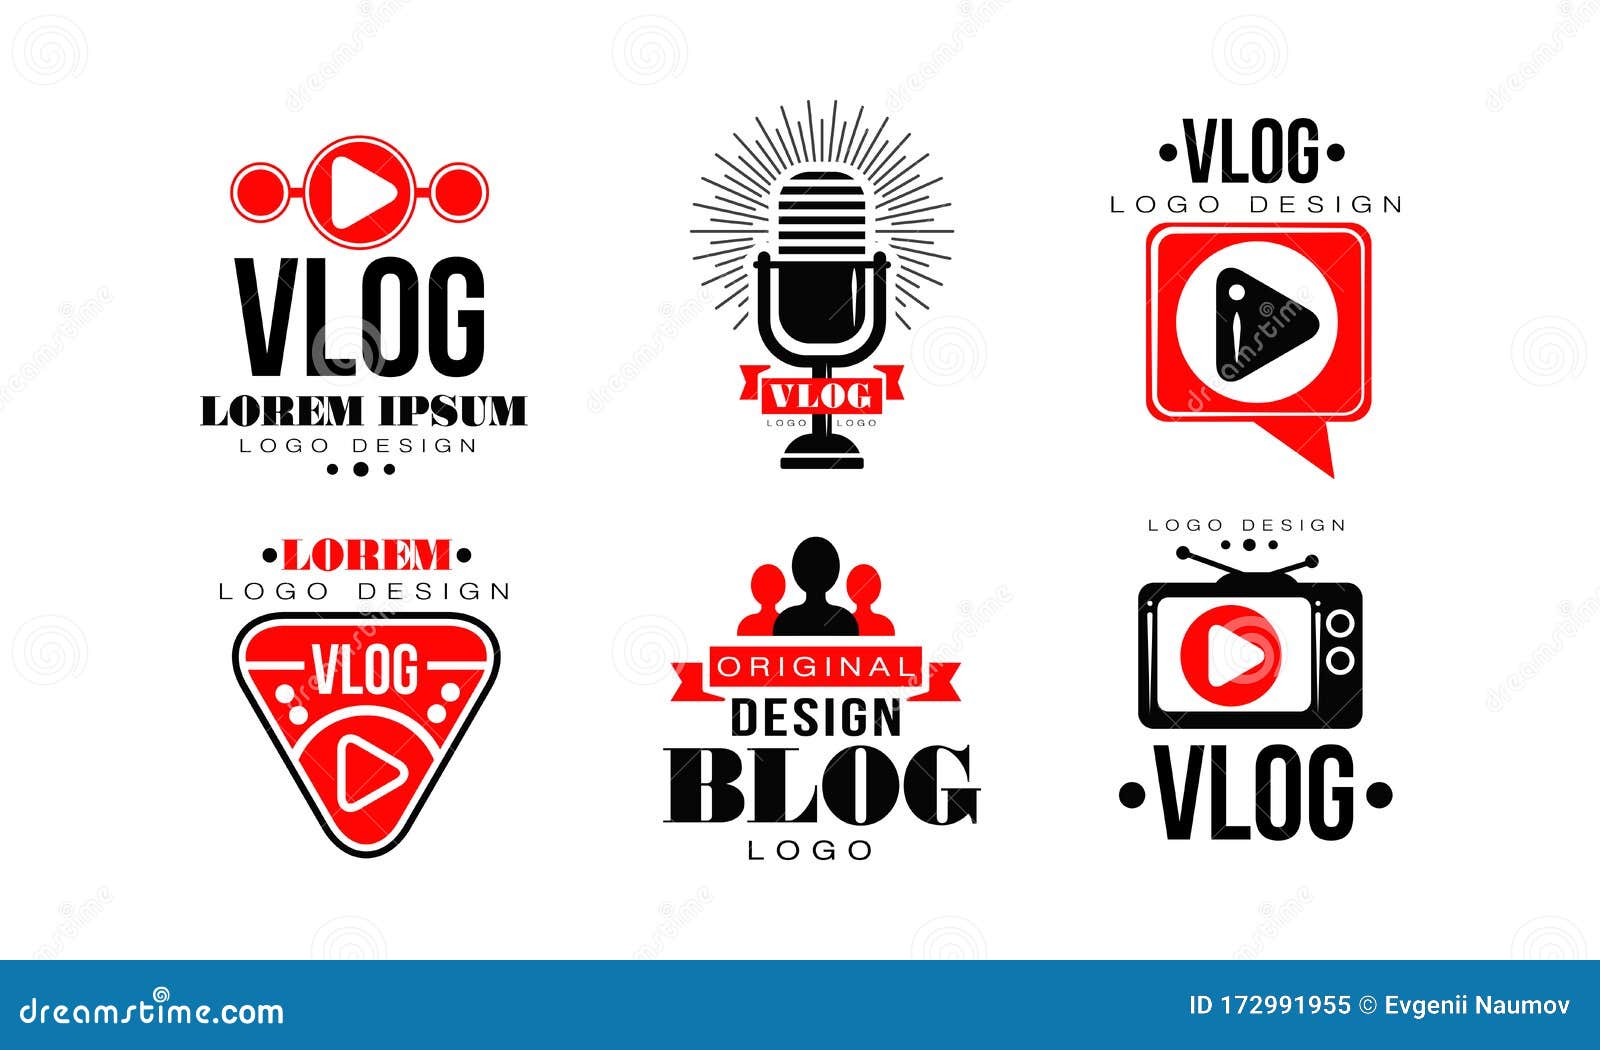 YouTube Vlogging Logo Design by EB Jahidul on Dribbble